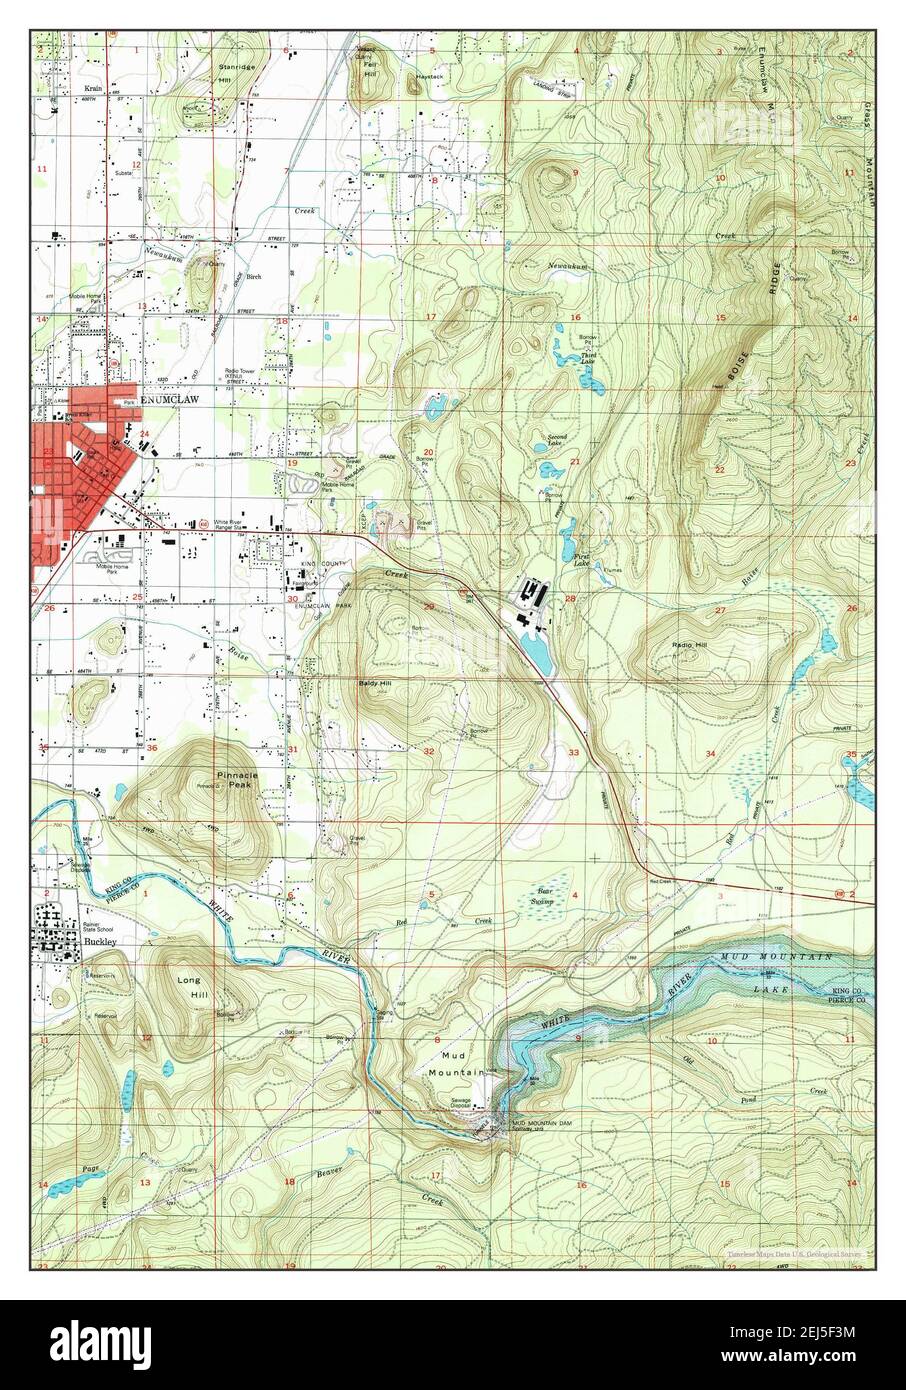 Enumclaw, Washington, map 1997, 1:24000, United States of America by Timeless Maps, data U.S. Geological Survey Stock Photo